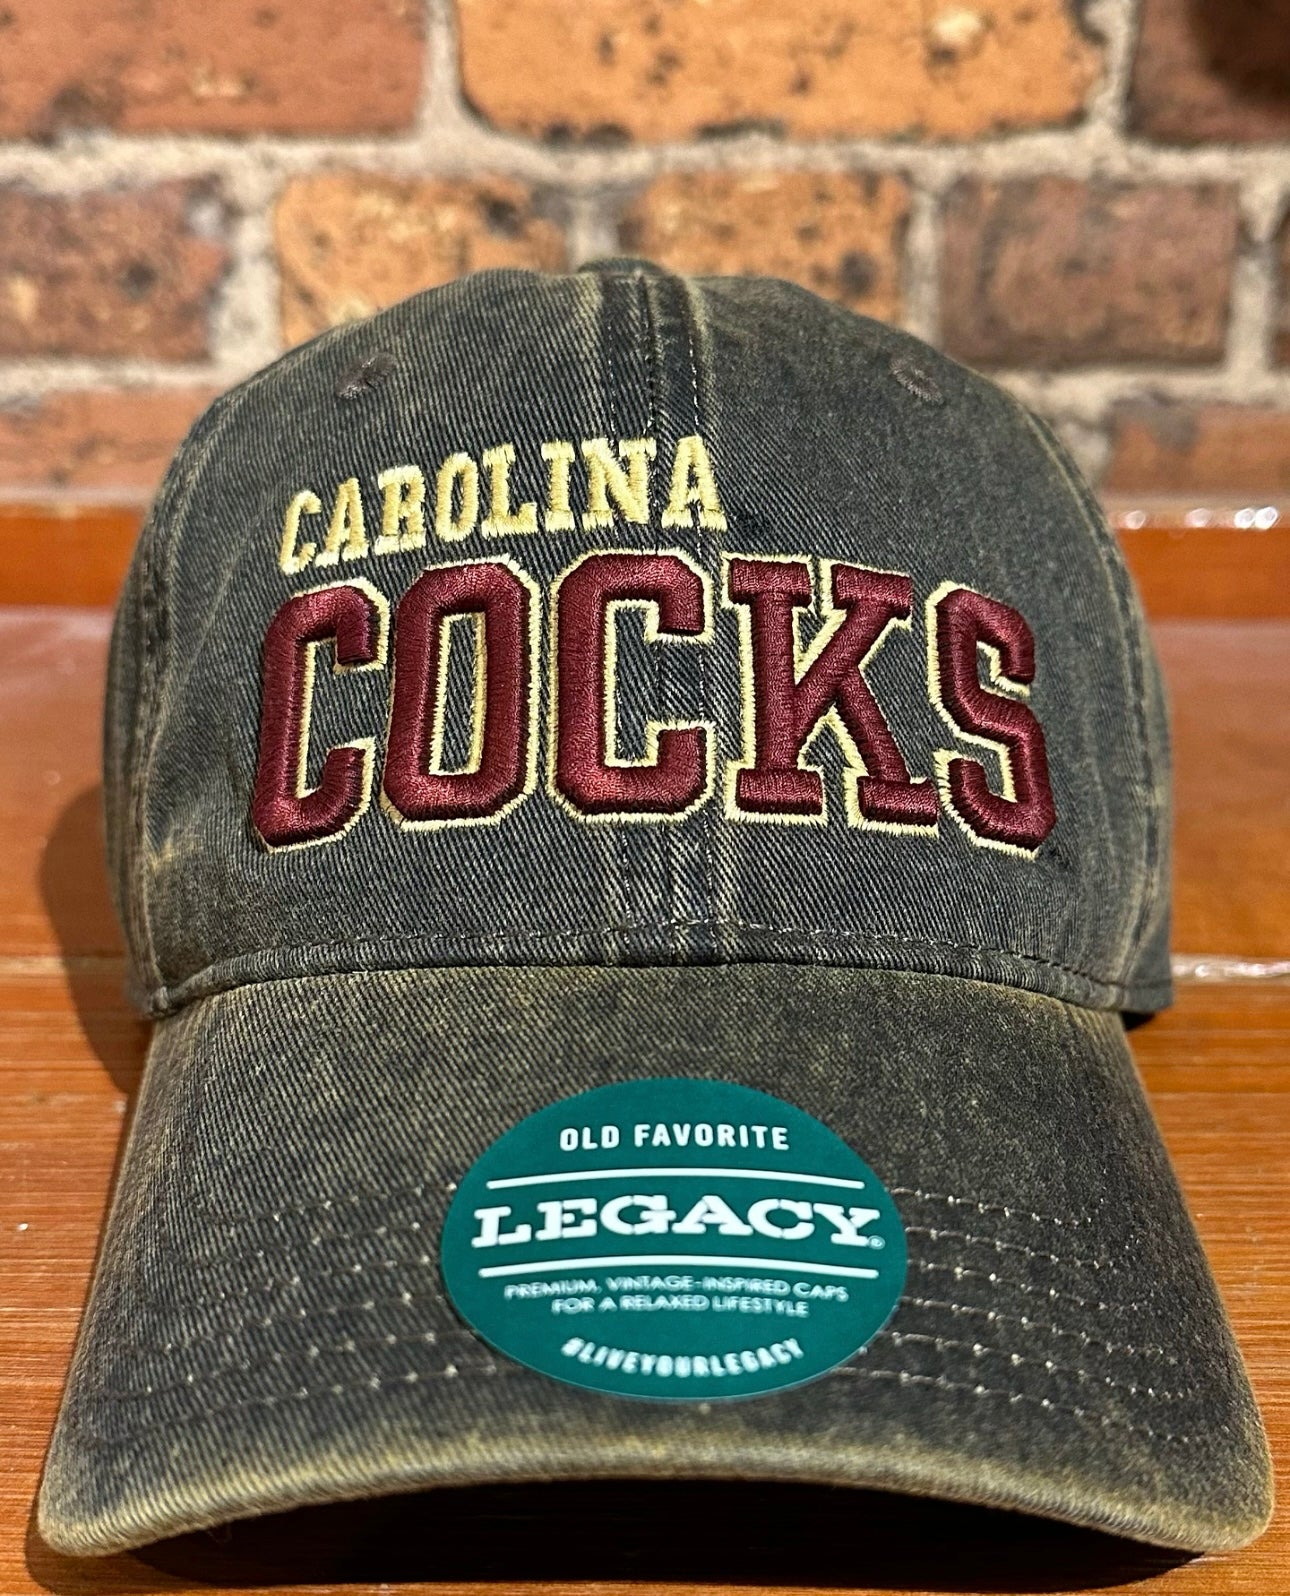 South Carolina Gamecocks 'Cocks' Hat - Legacy